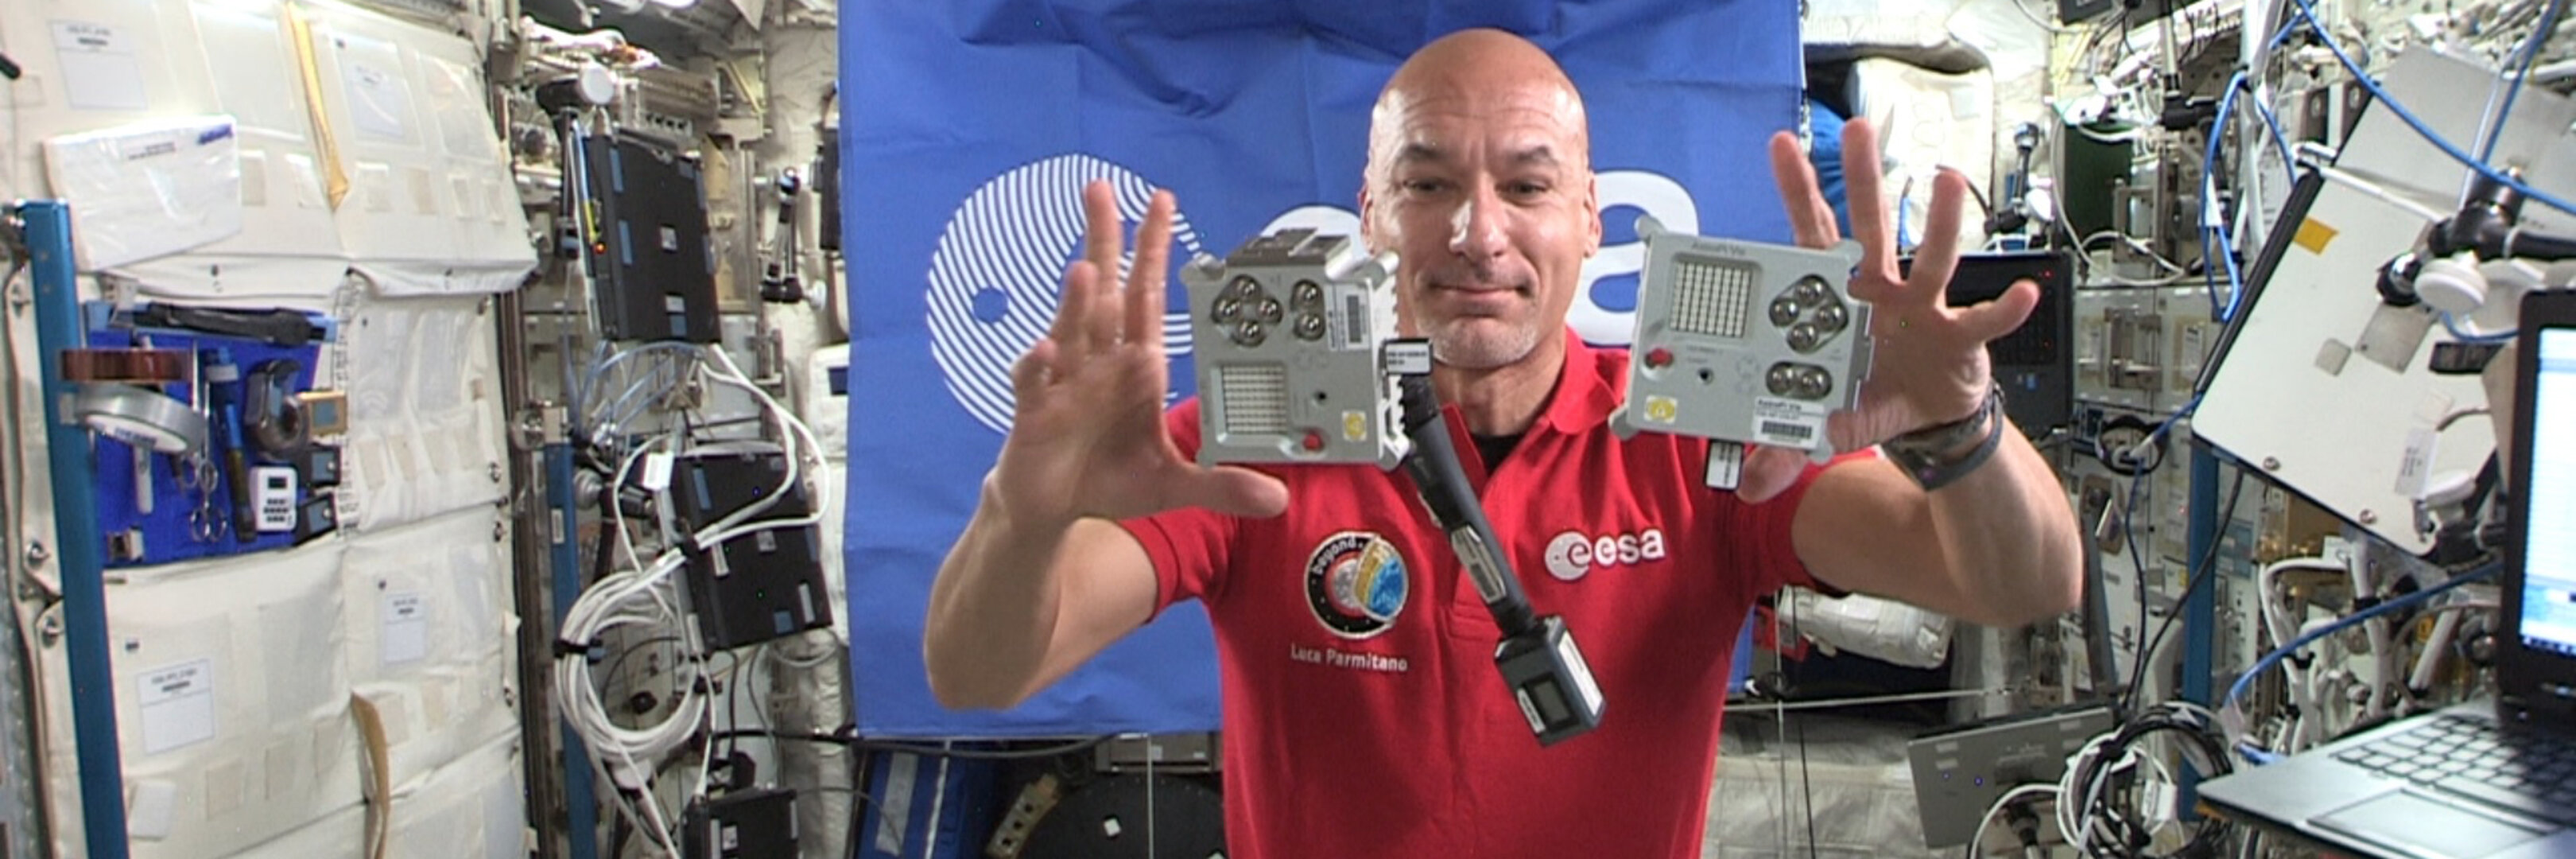 ESA astronaut Luca Parmitano with Ed and Izzy